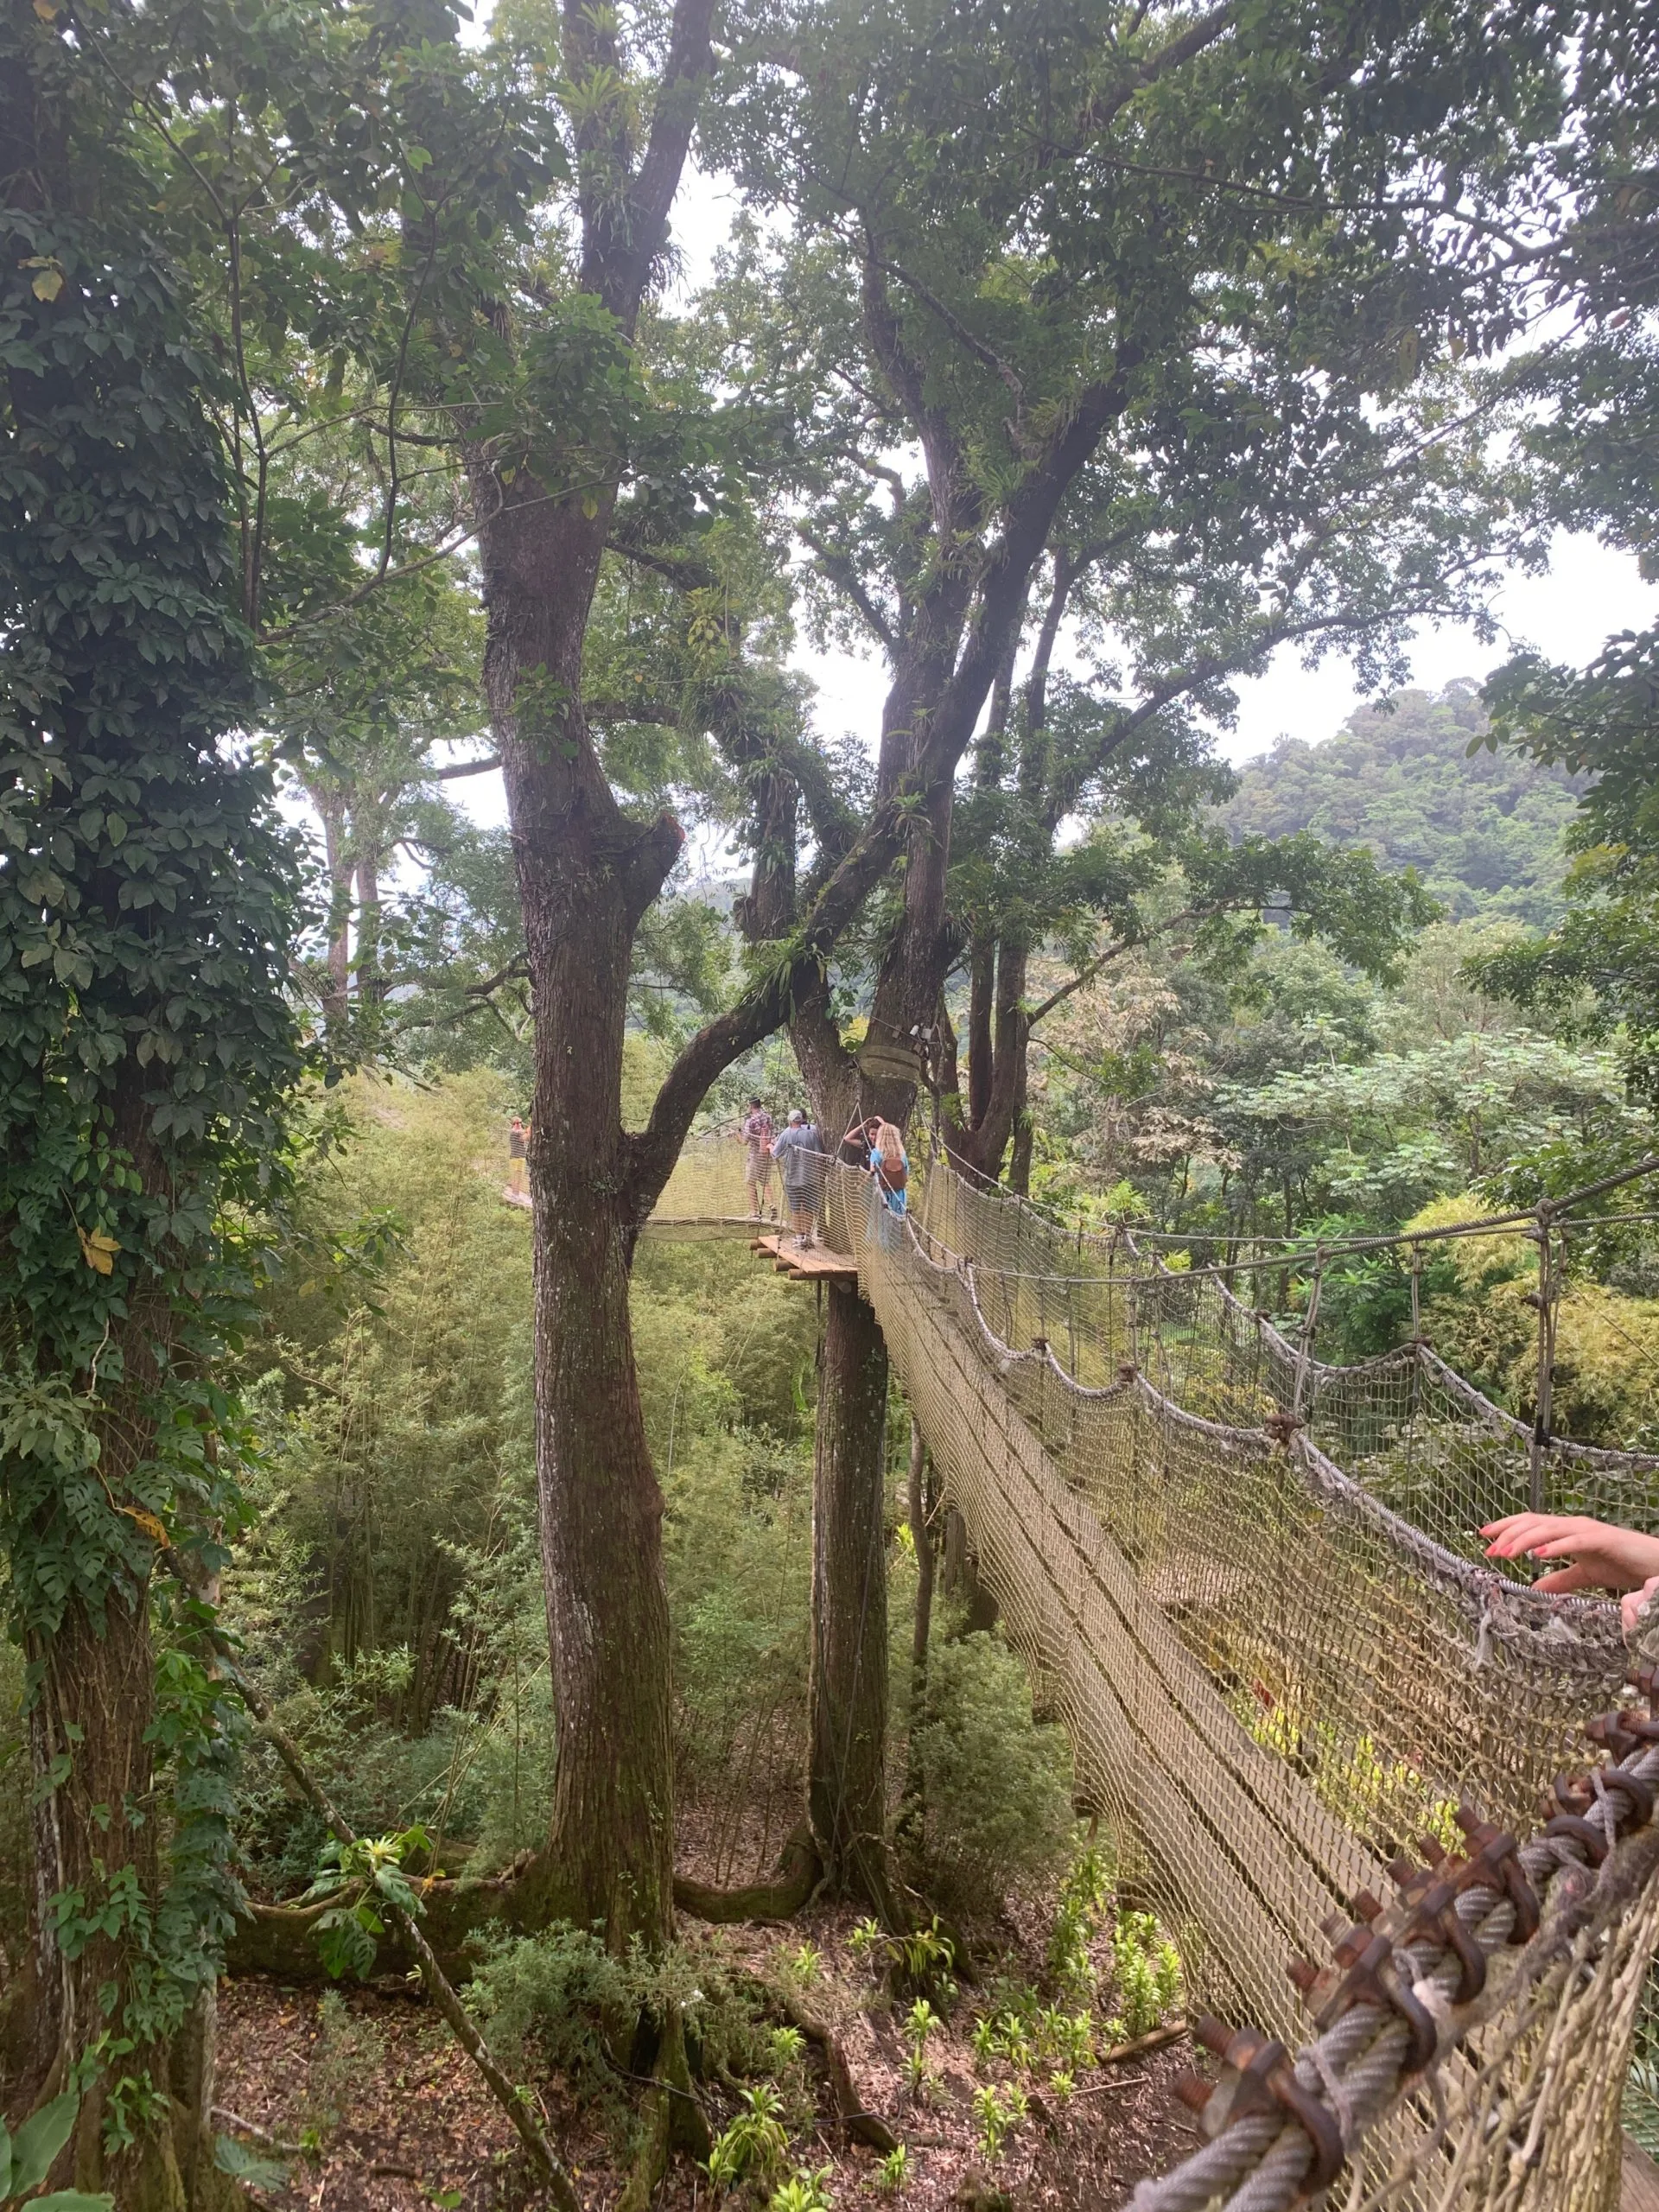 The "treetop view" bridge at Jardin de Balata (Batala Gardens) in Martinique 